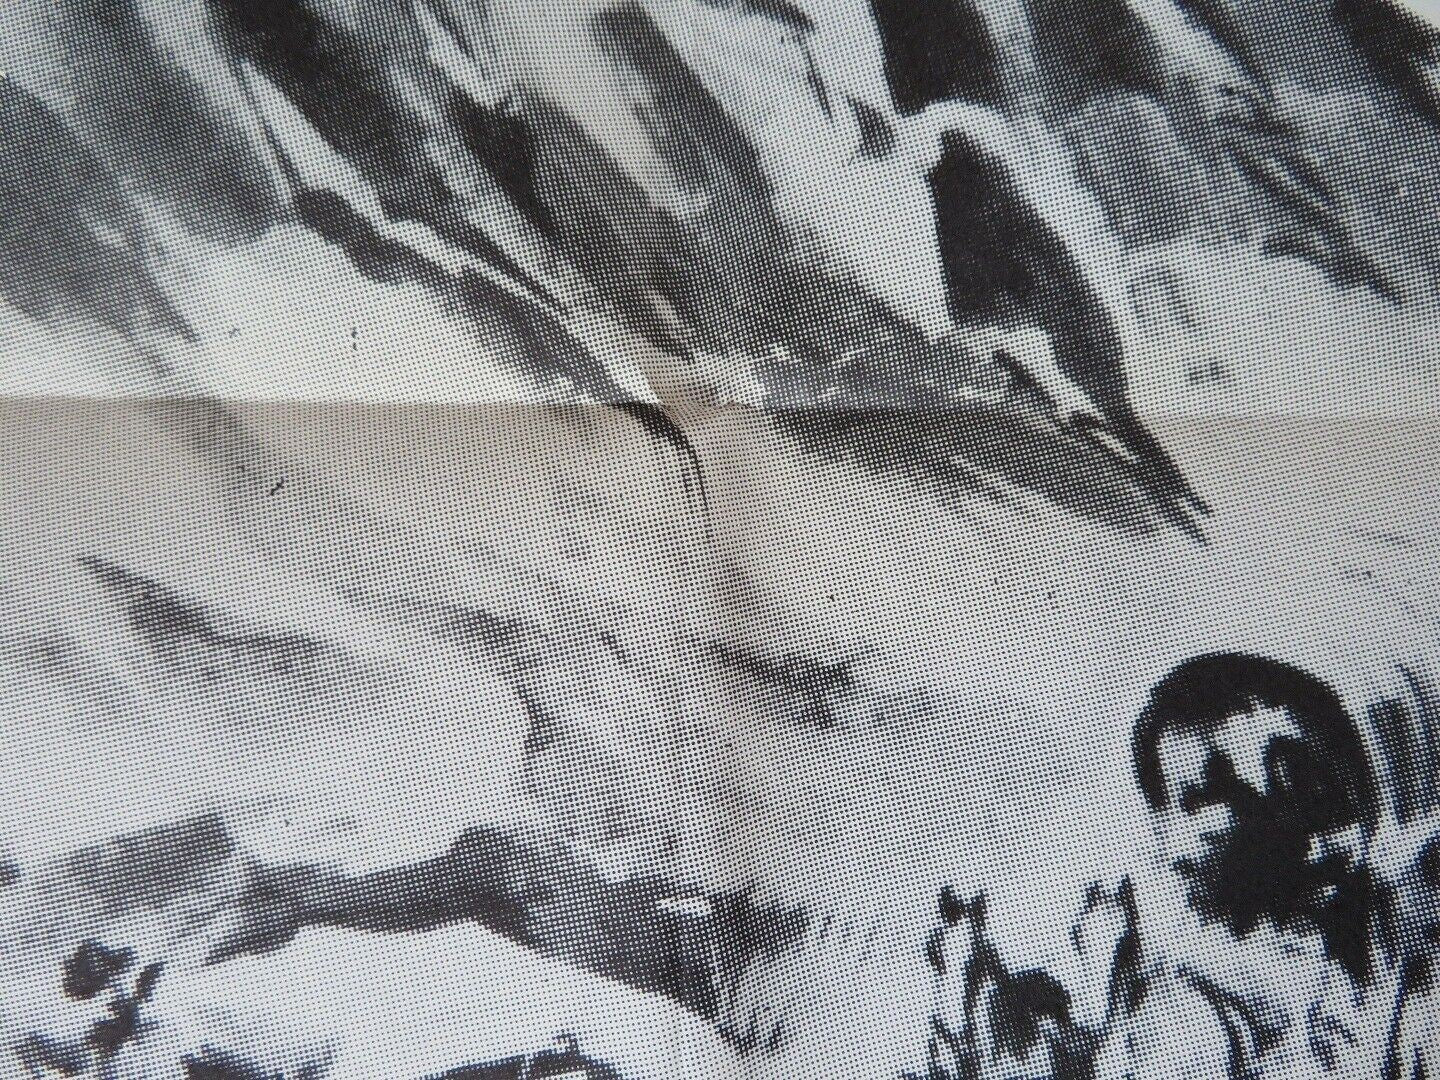 THE ROAD TO FORT ALAMO MARIO BAVA US ORIGINAL 1 SHEET POSTER RETRO 1964